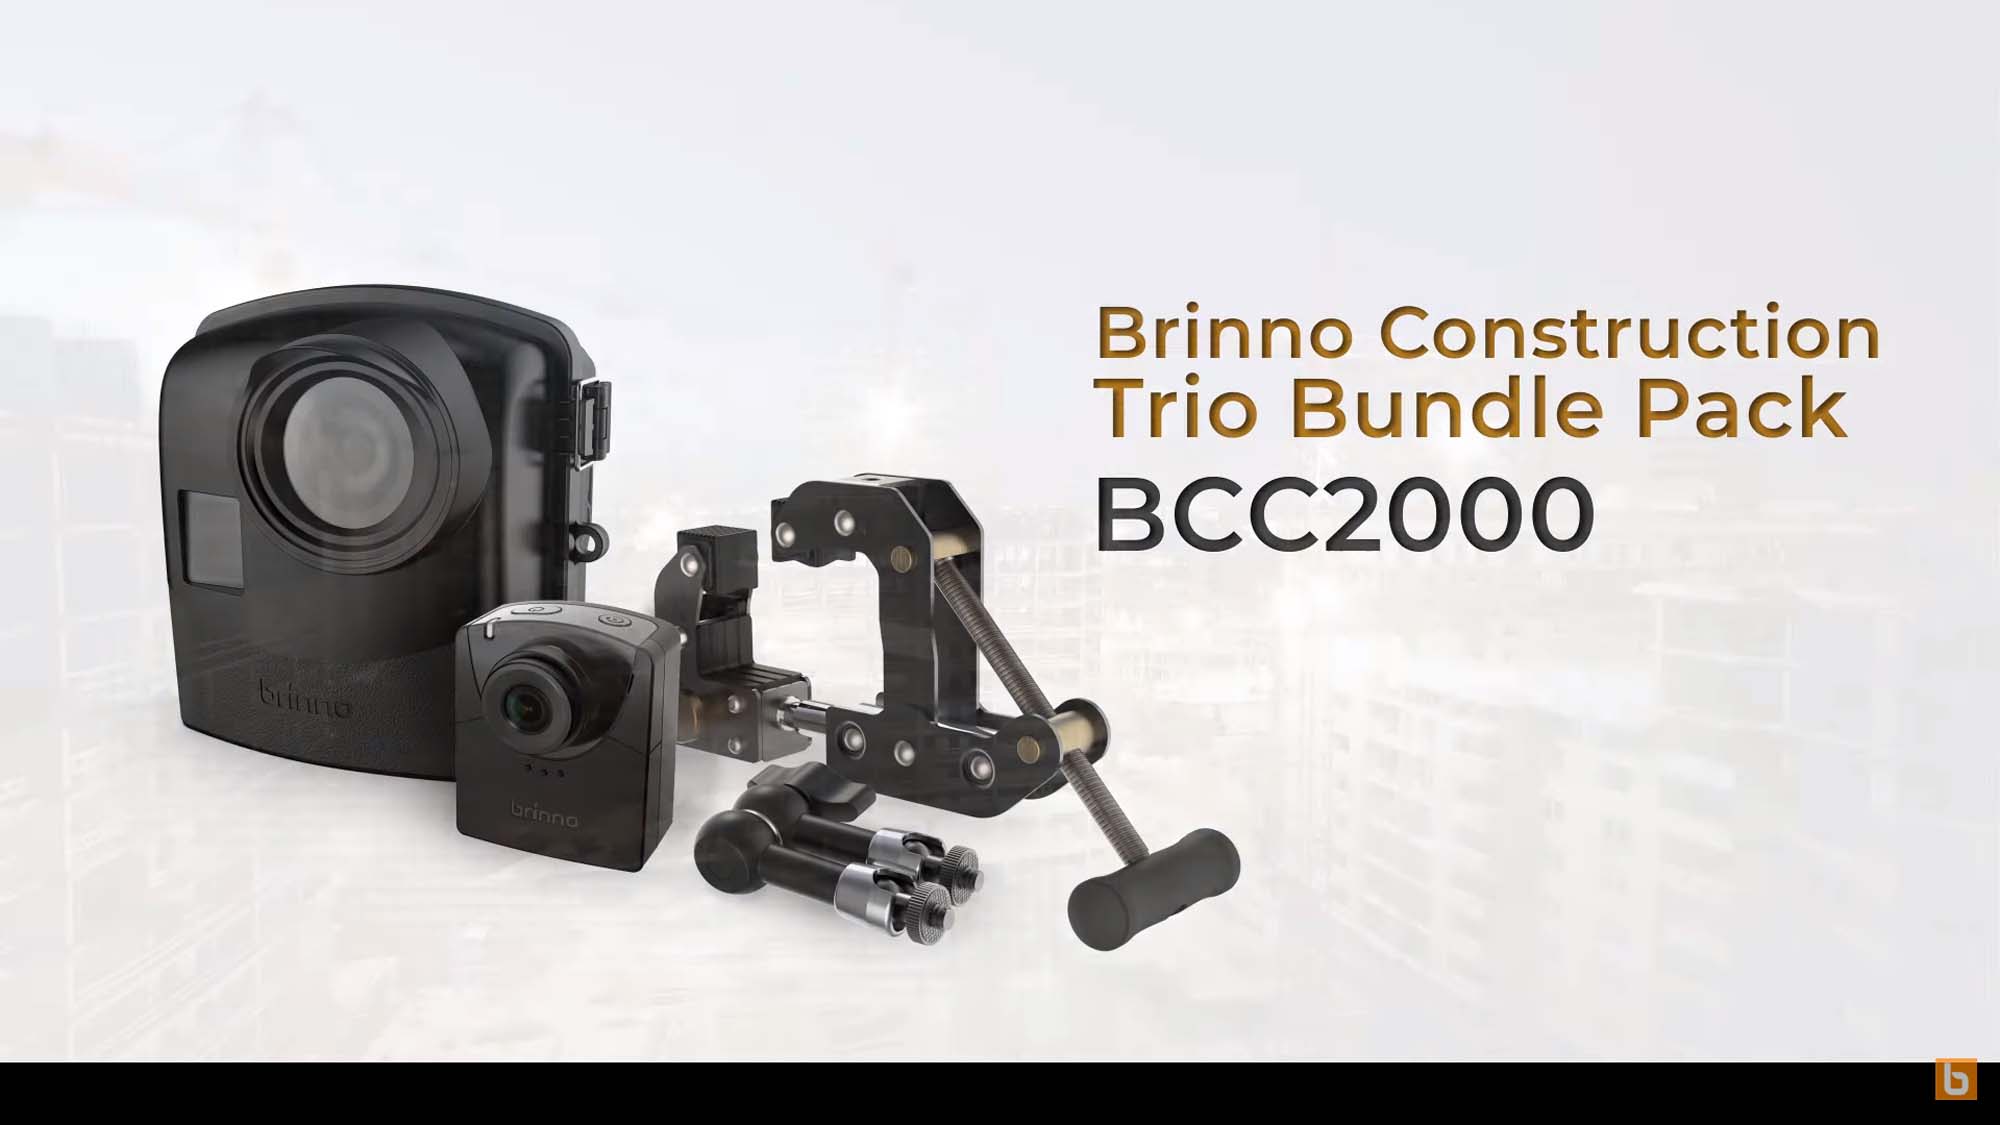 Brinno Construction Trio Bundle Pack BCC2000 pitch video